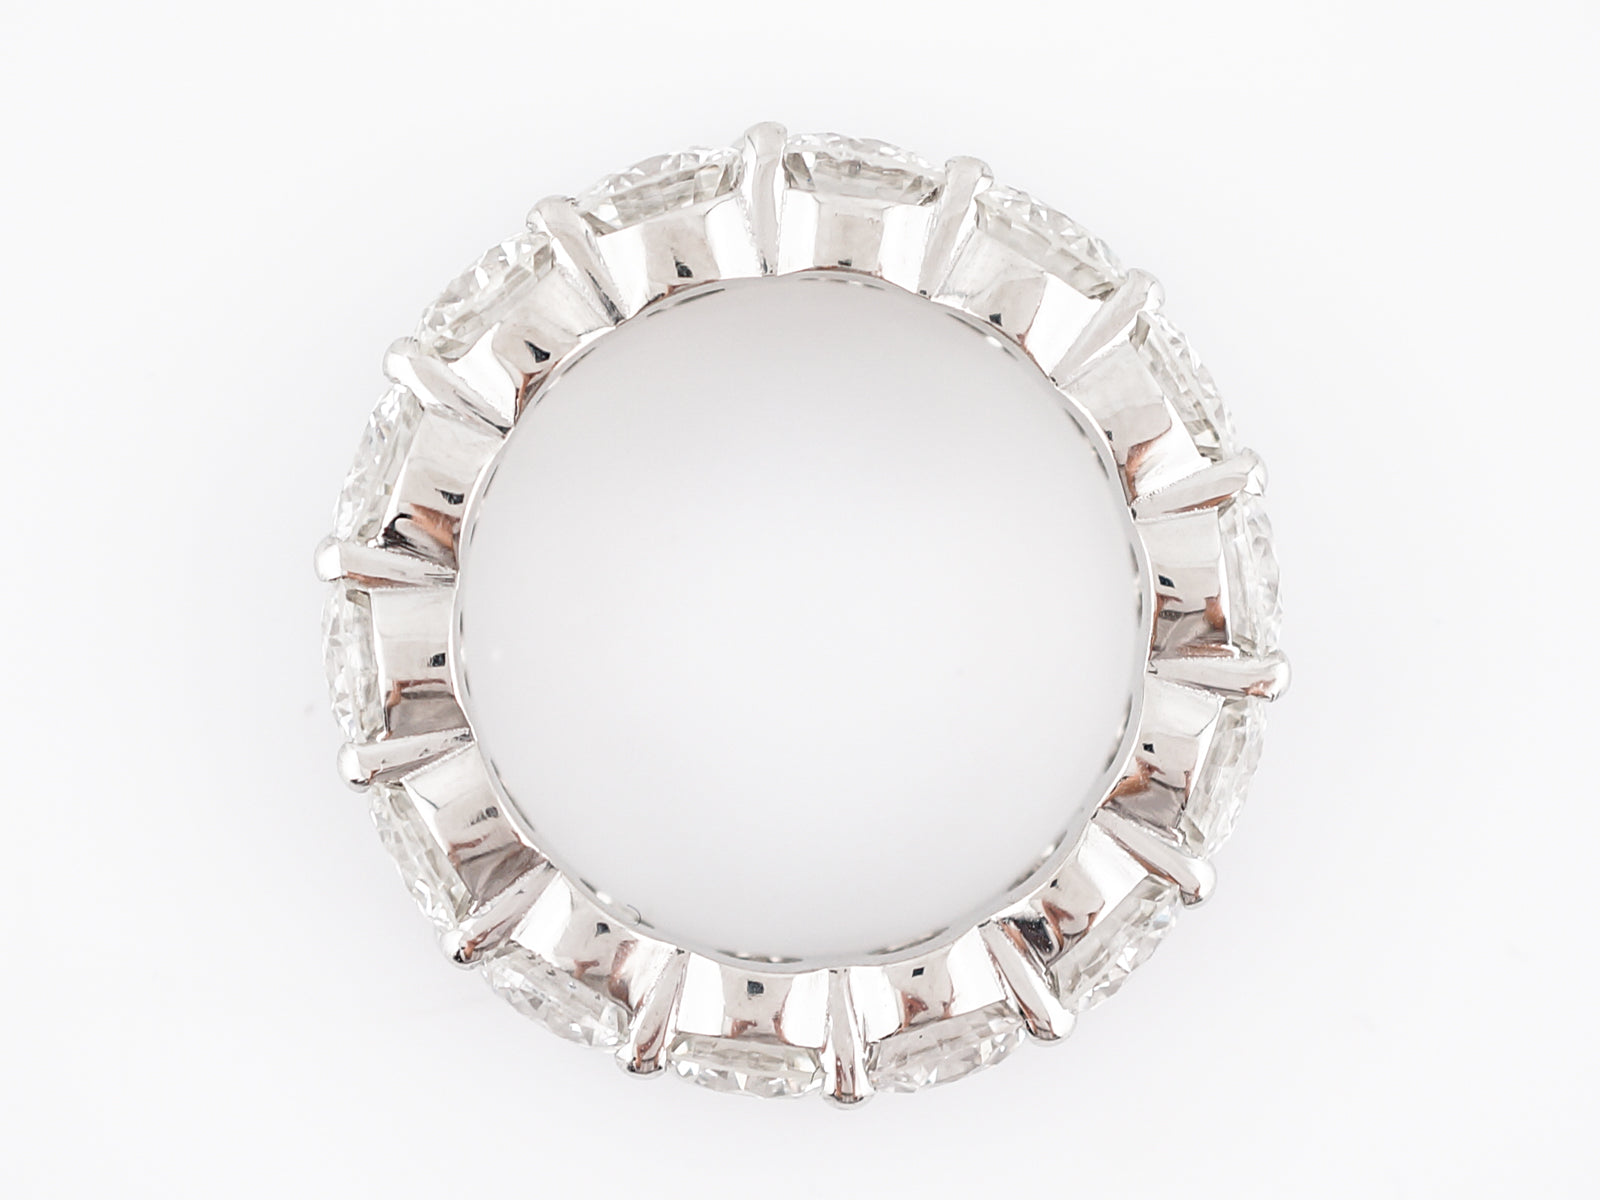 Right Hand Ring Modern 6.97 Round Brilliant Cut Diamond in Platinum